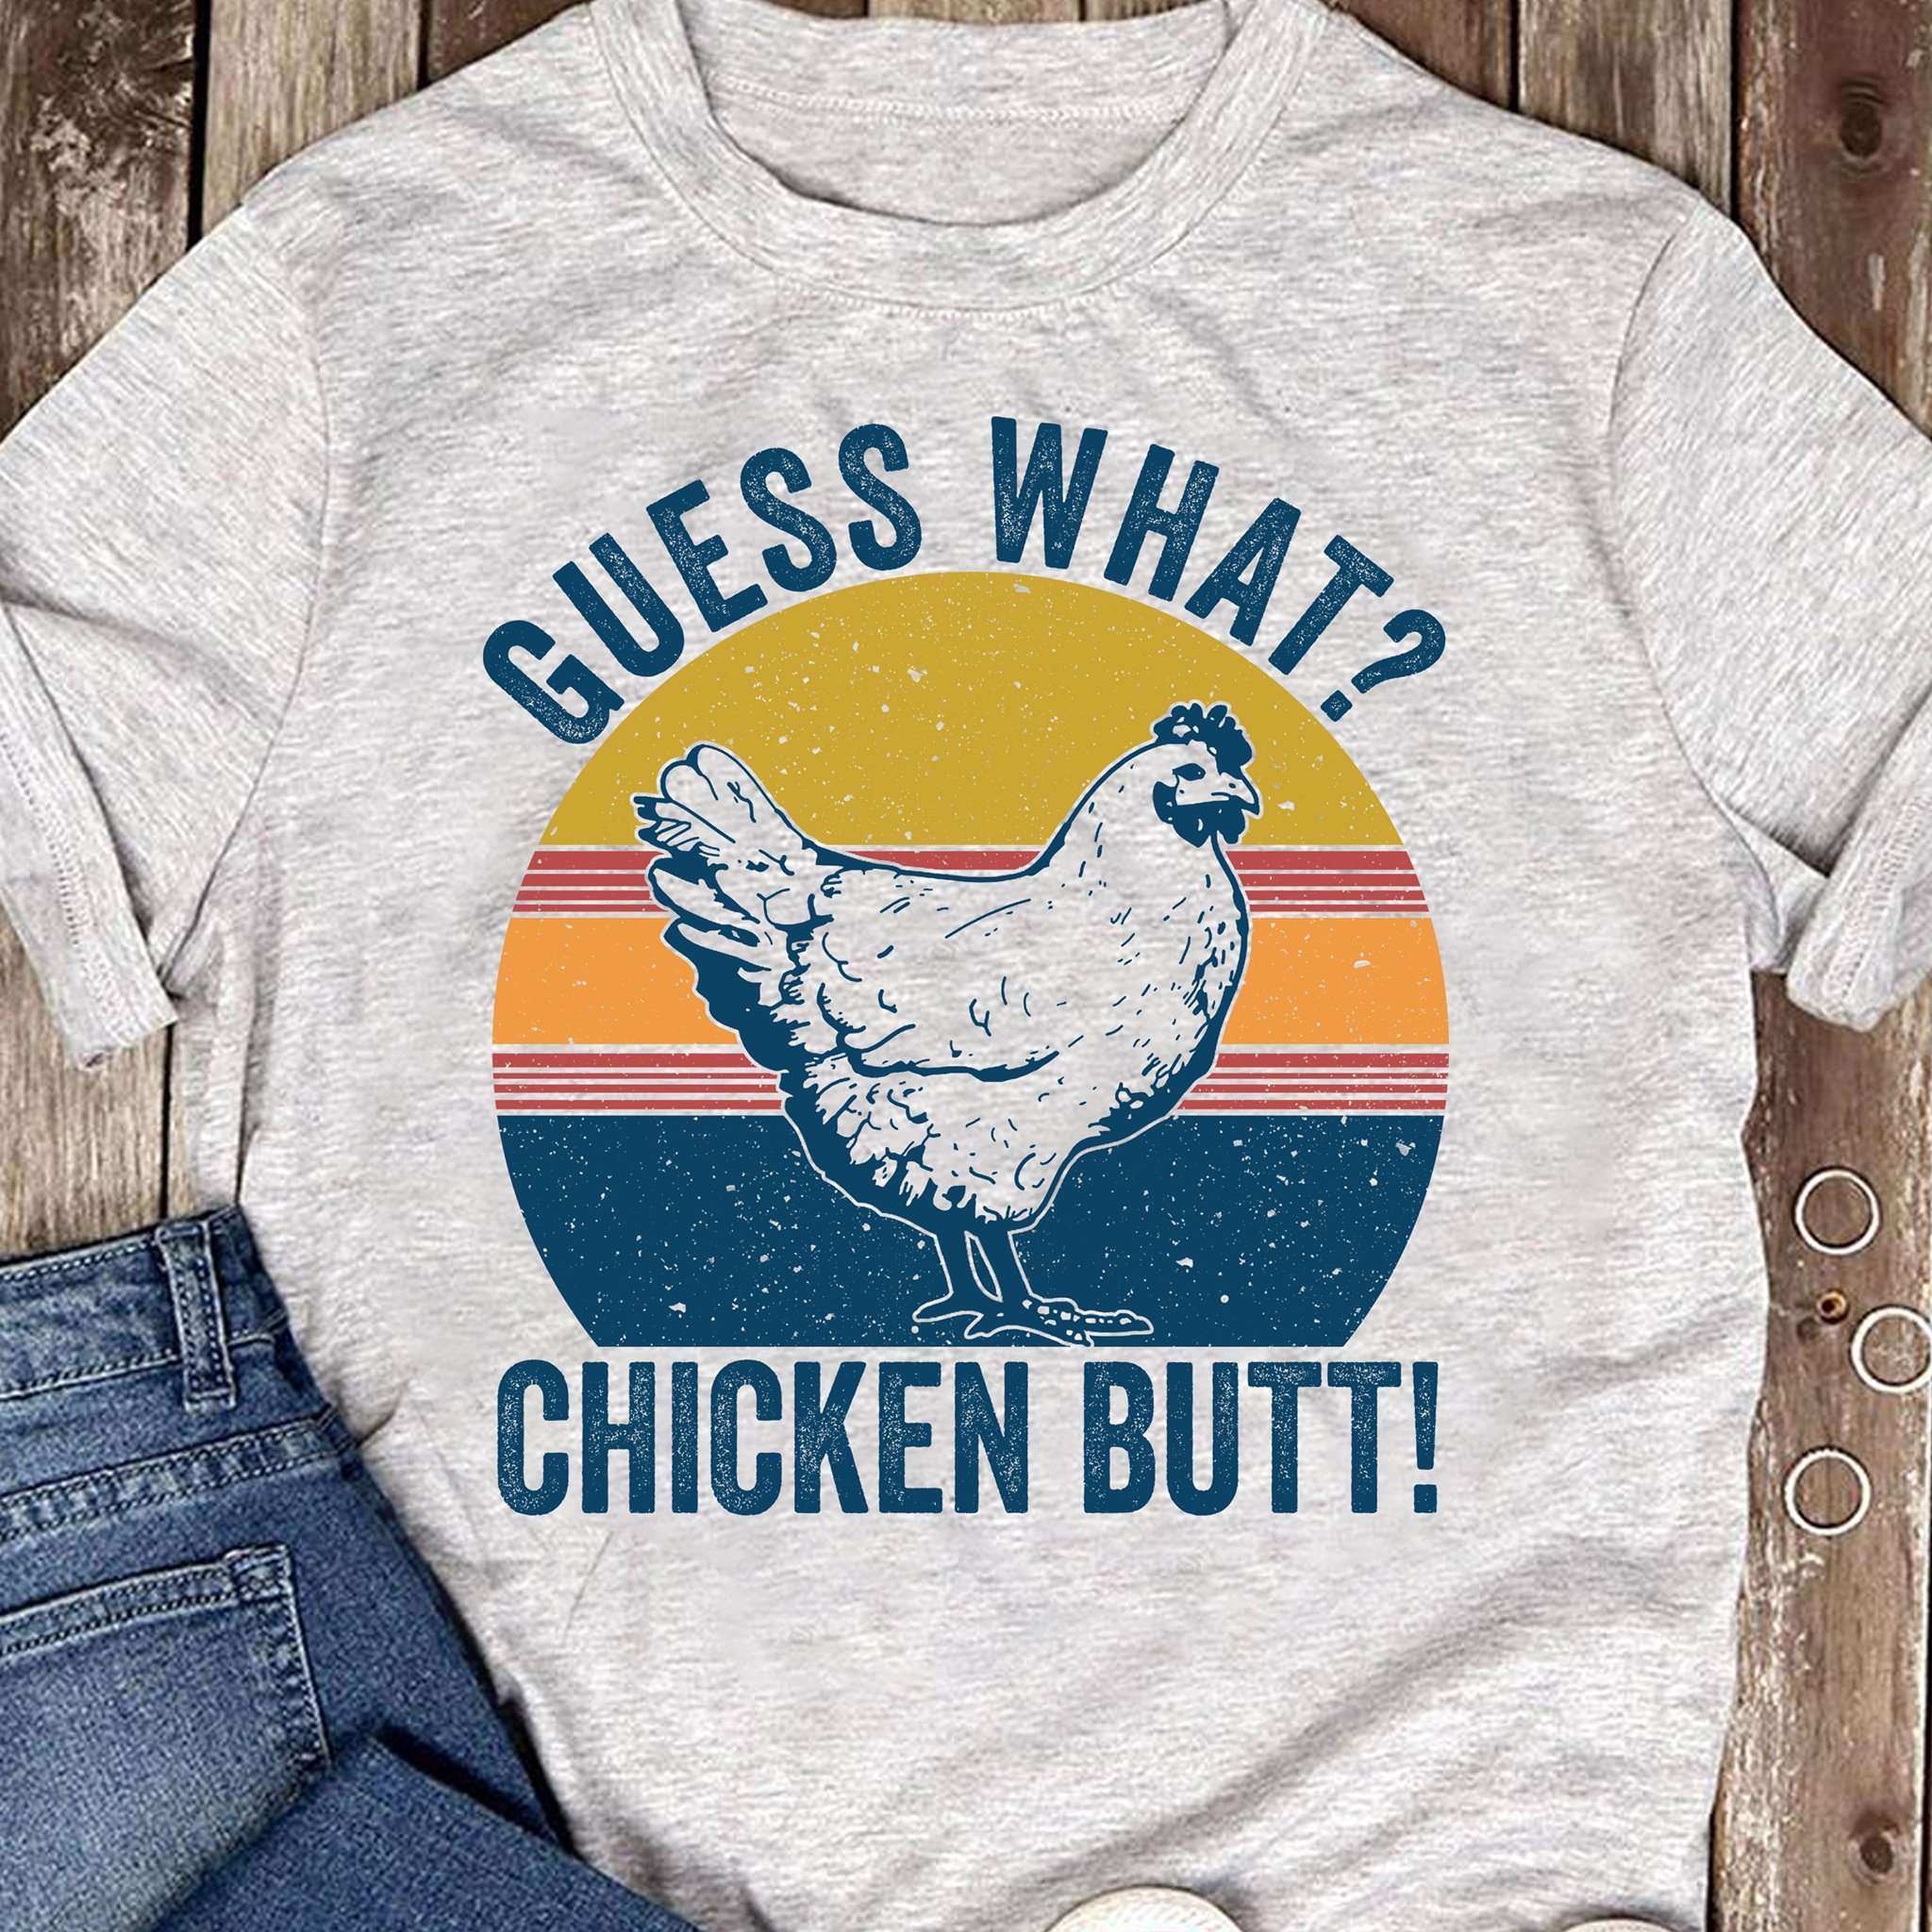 Guess what Chicken butt - Chicken cluck animal